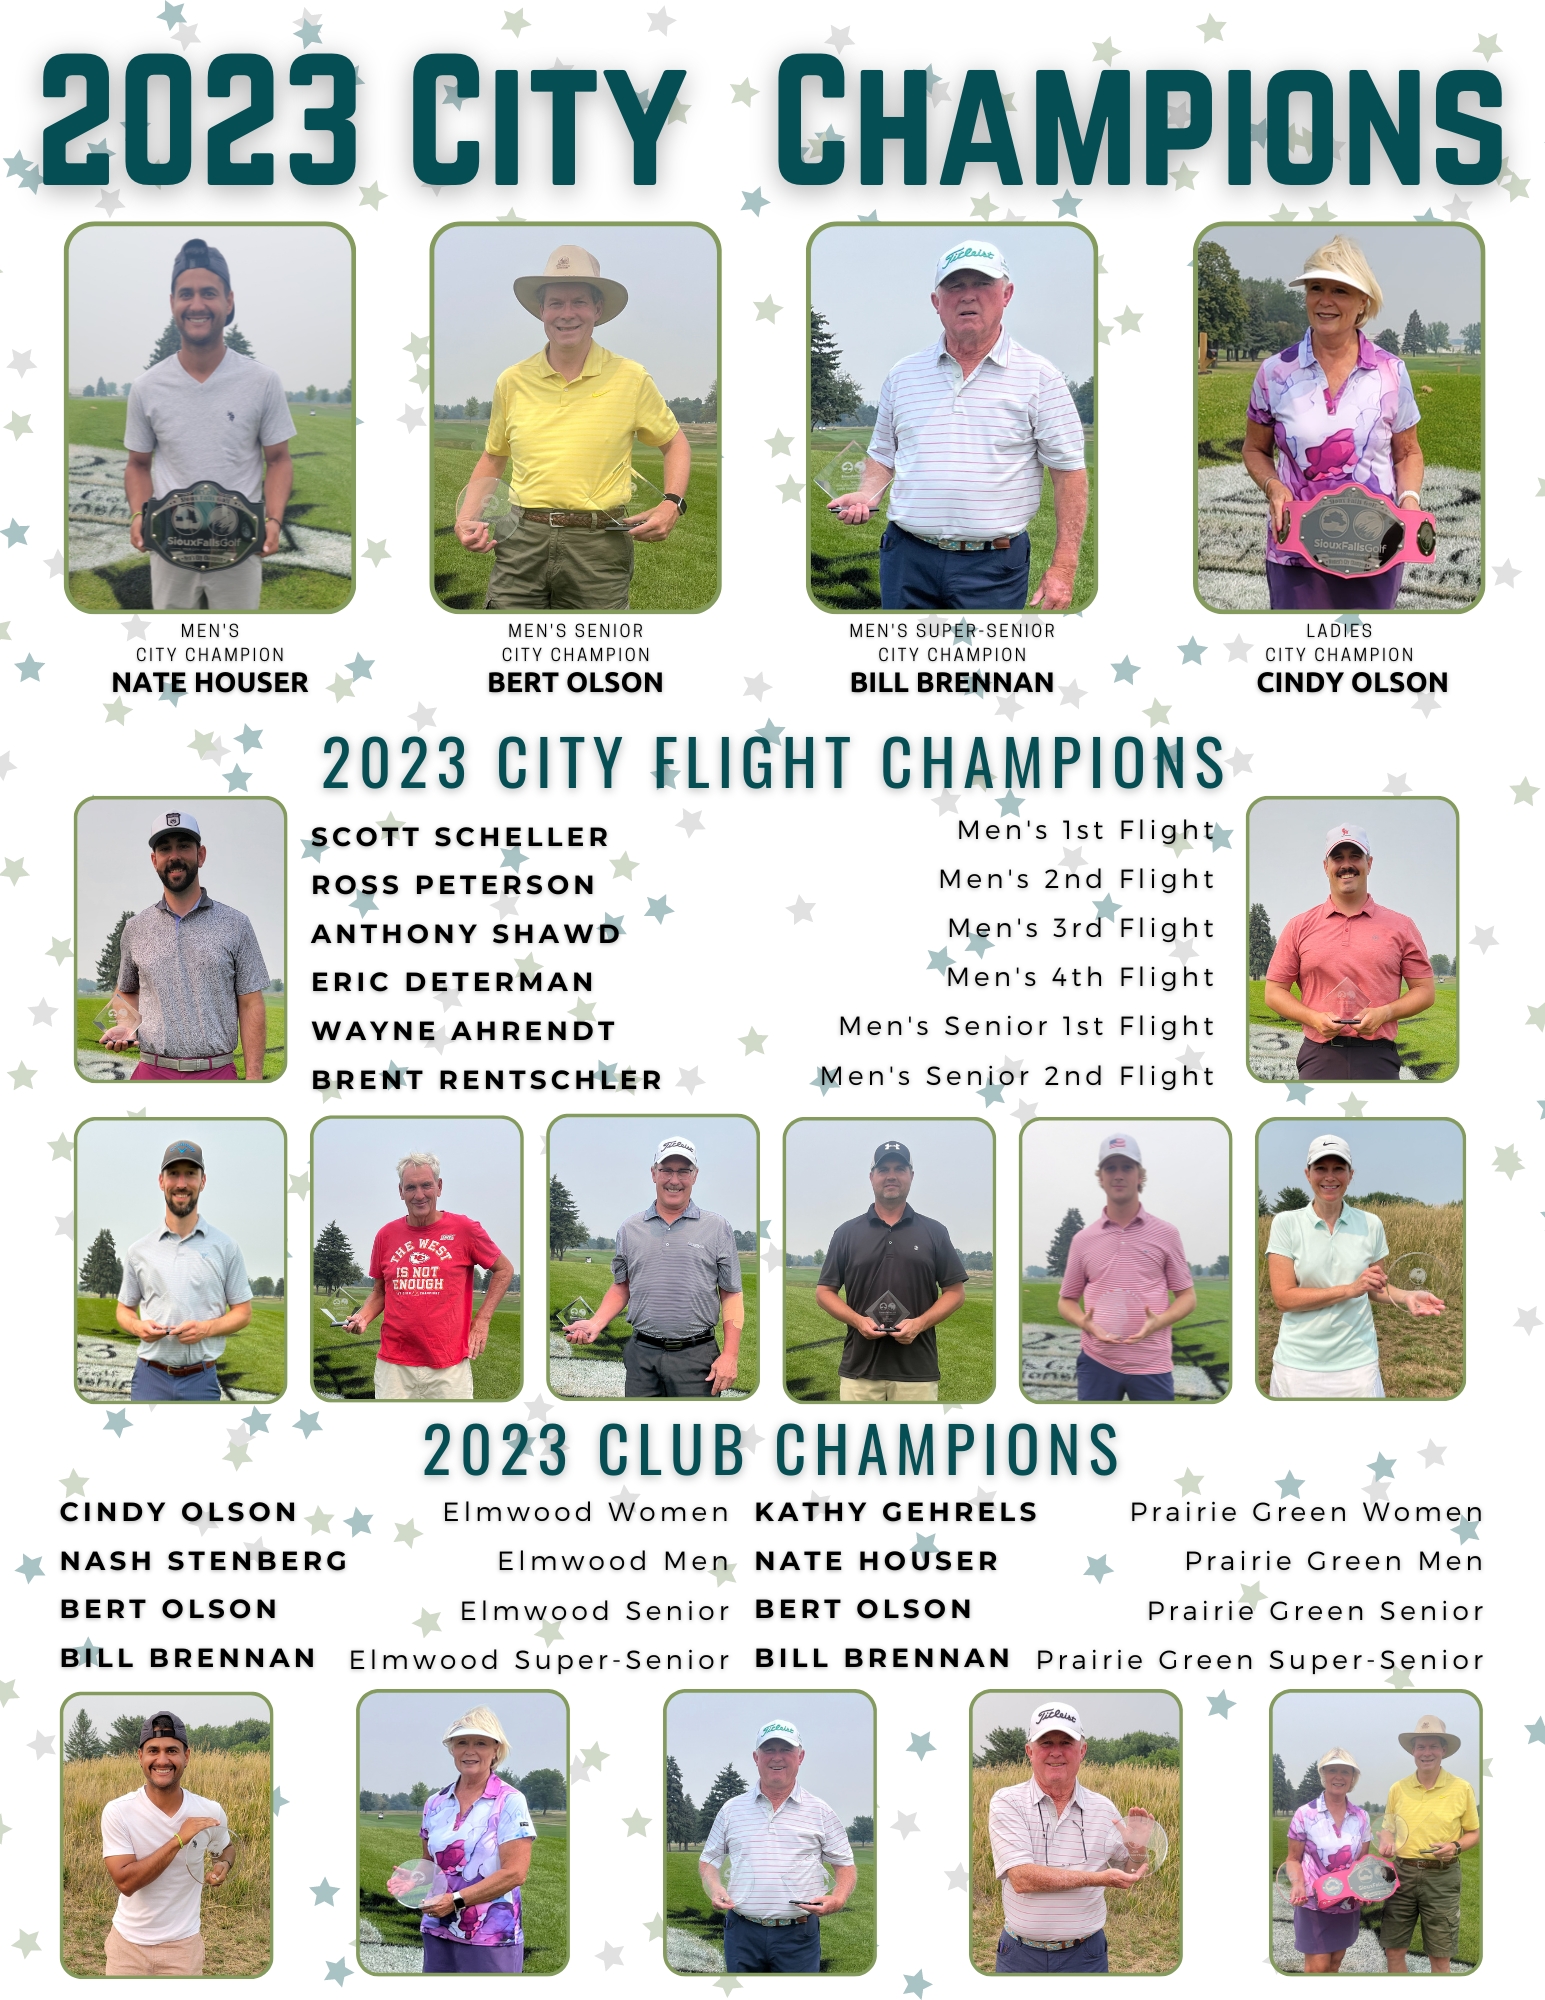 2023 City Champions